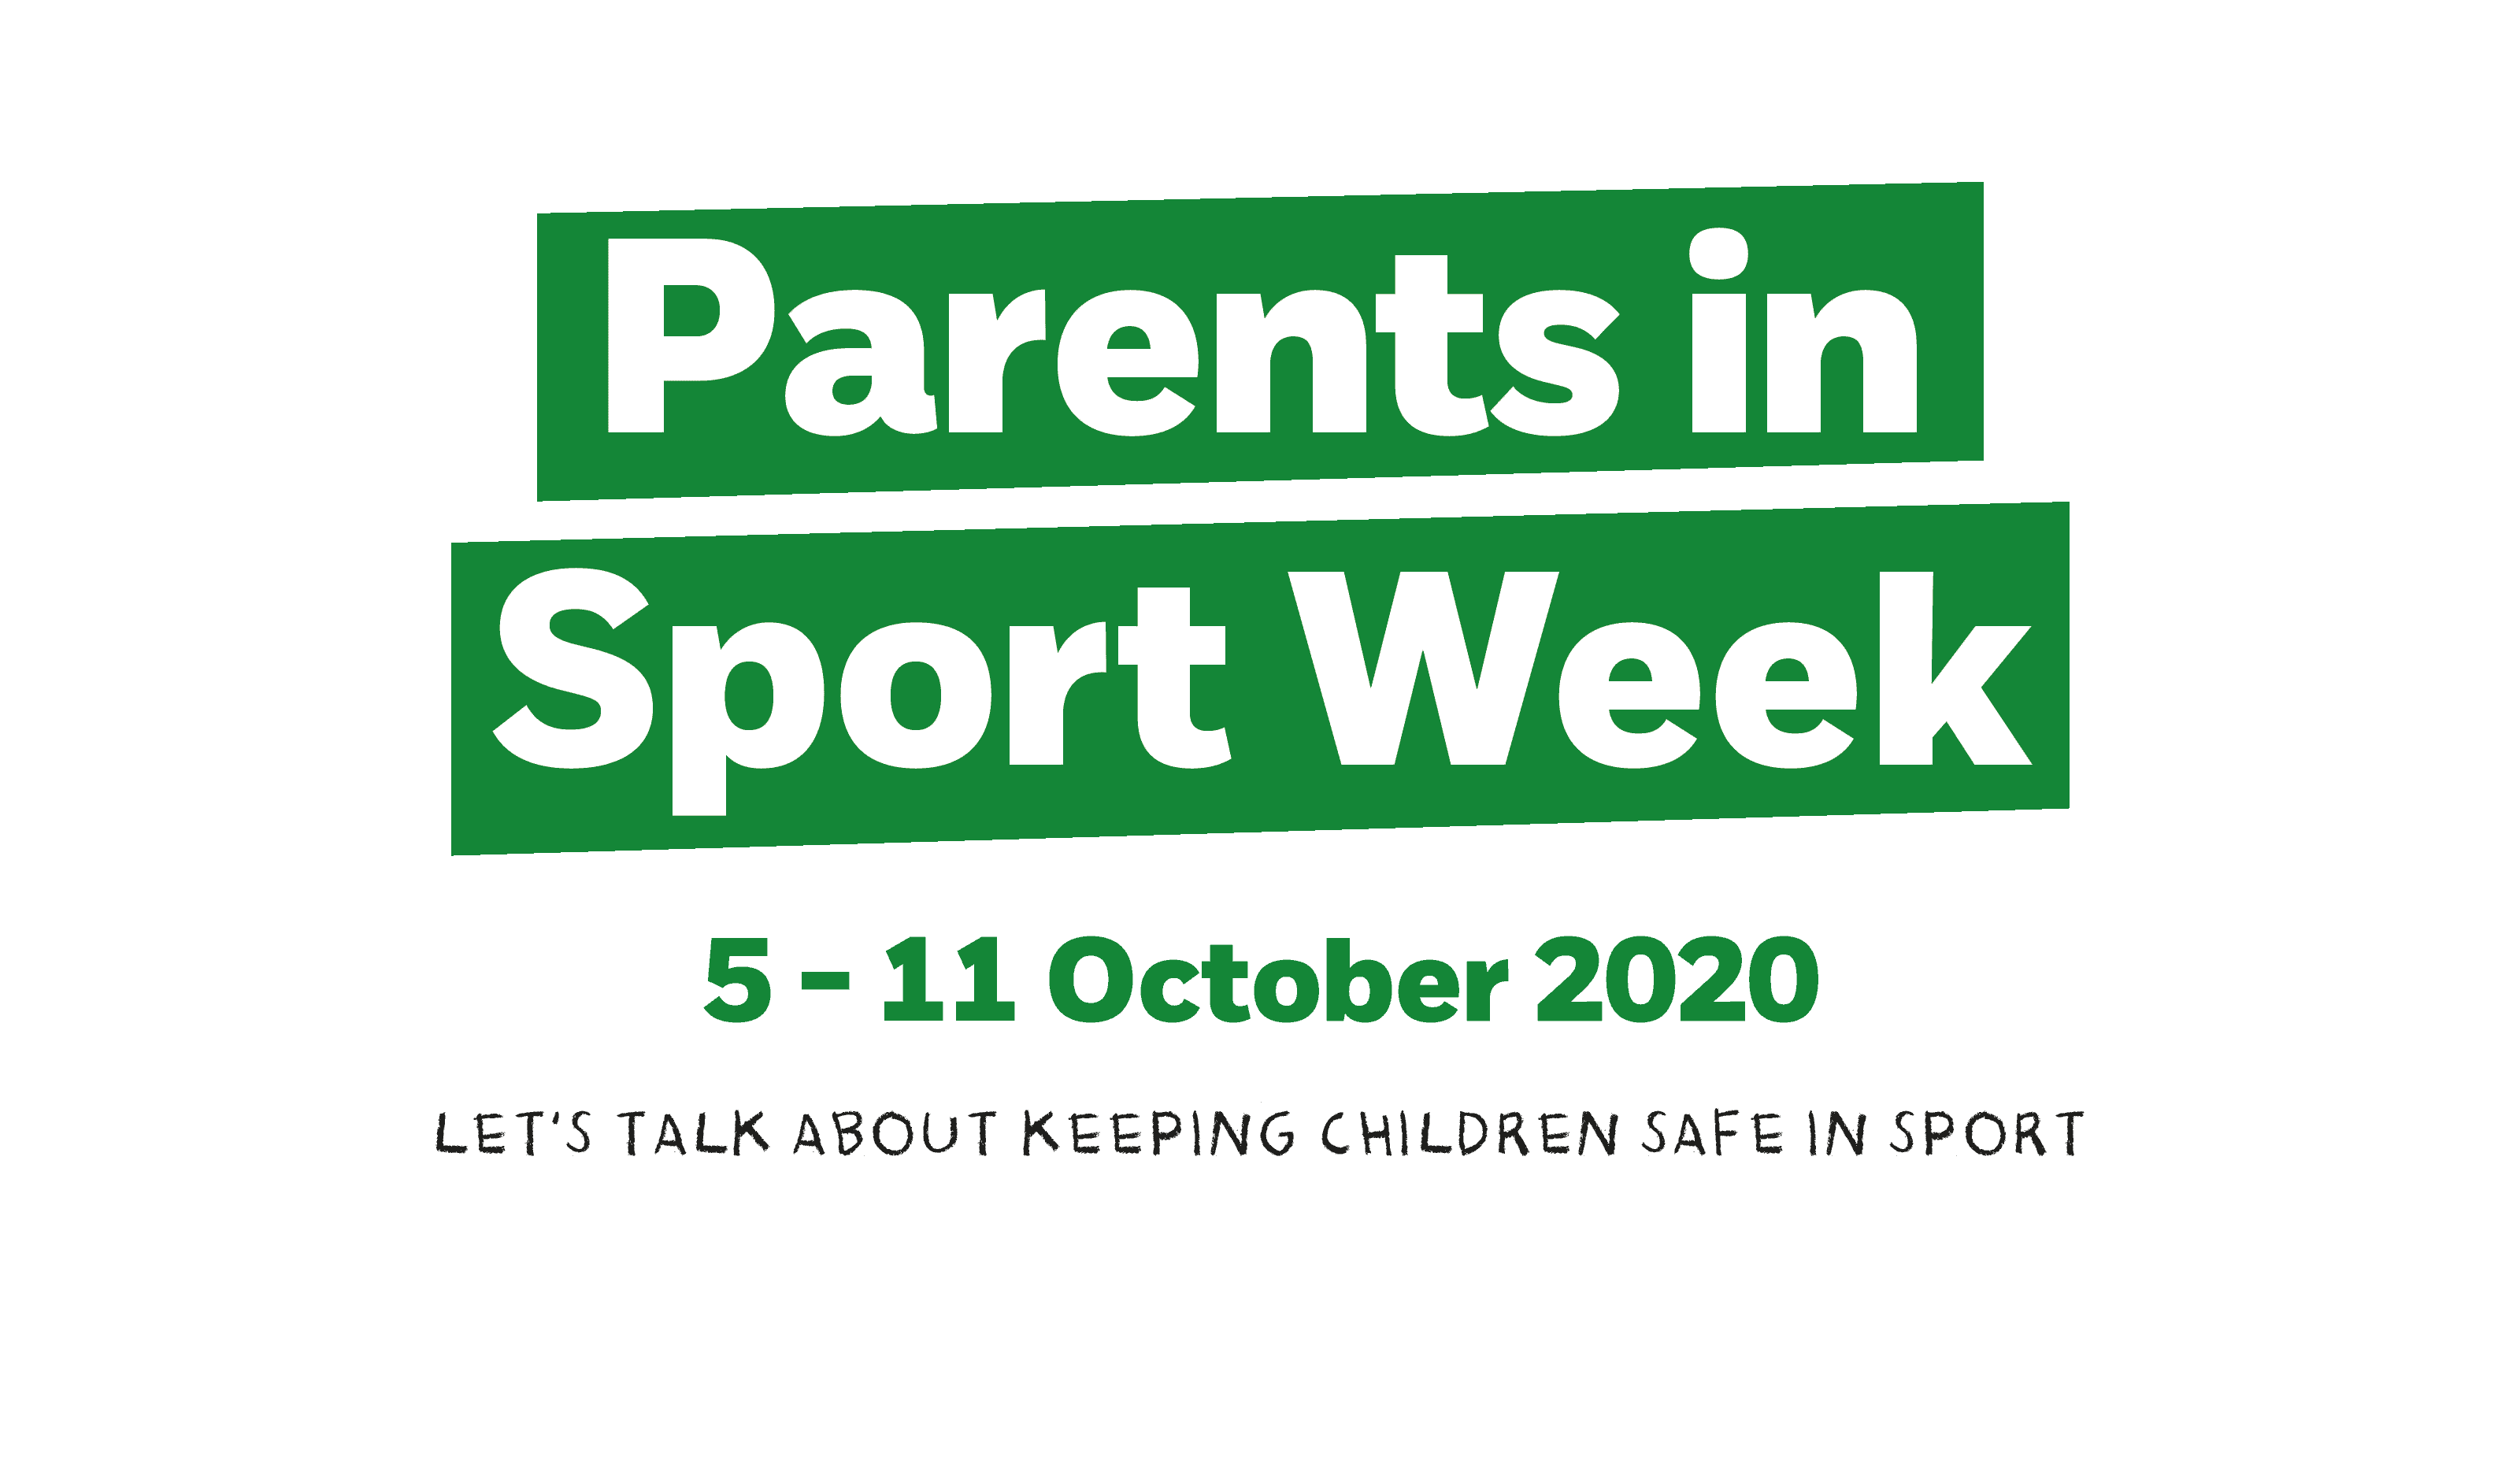 Parents in Sport Week begins: 5-11 October